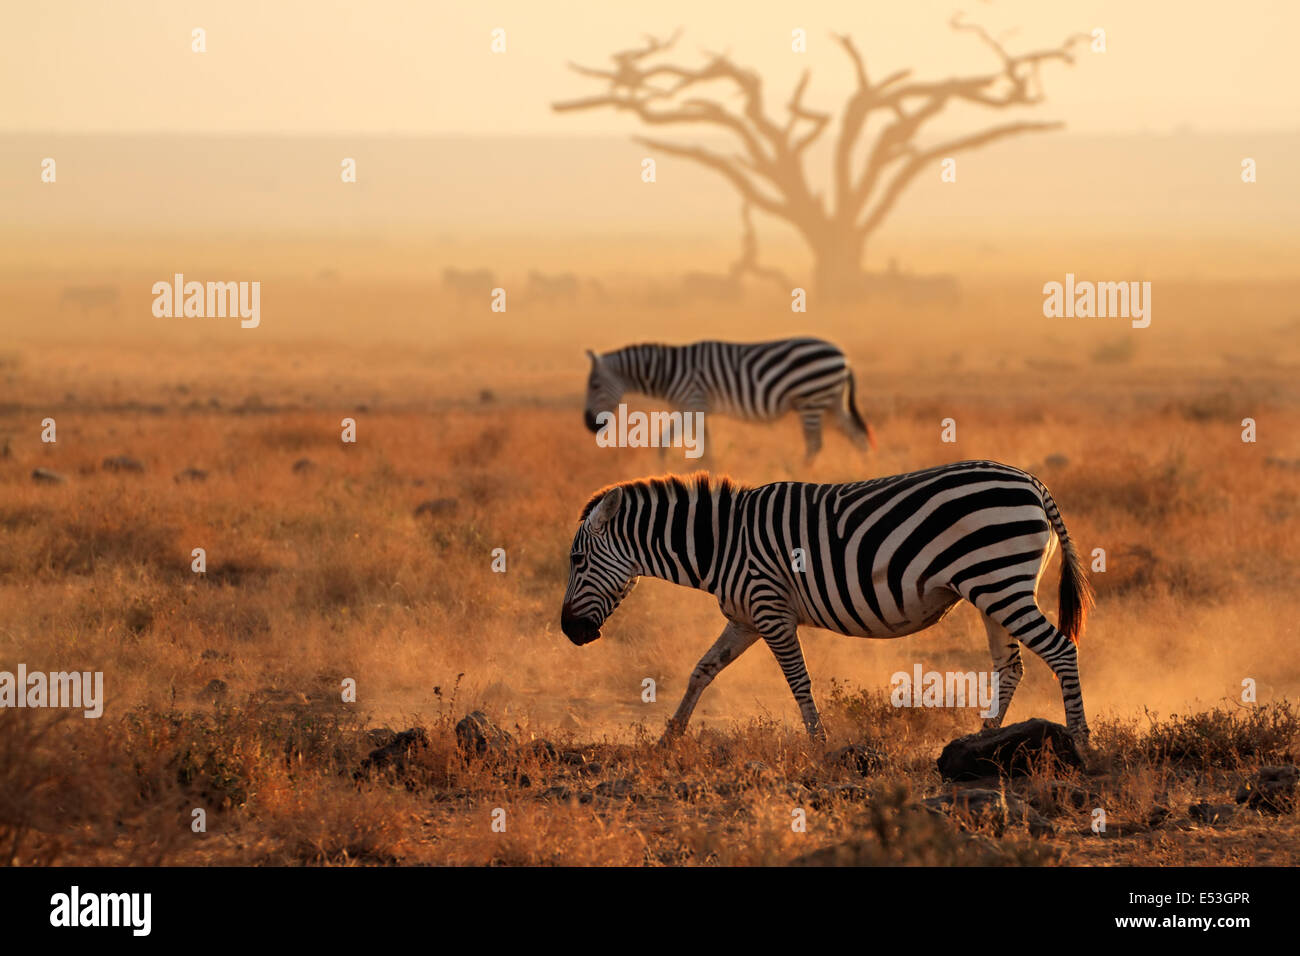 Plains zebras (Equus burchelli) walking on dusty plains, Amboseli National Park, Kenya Stock Photo